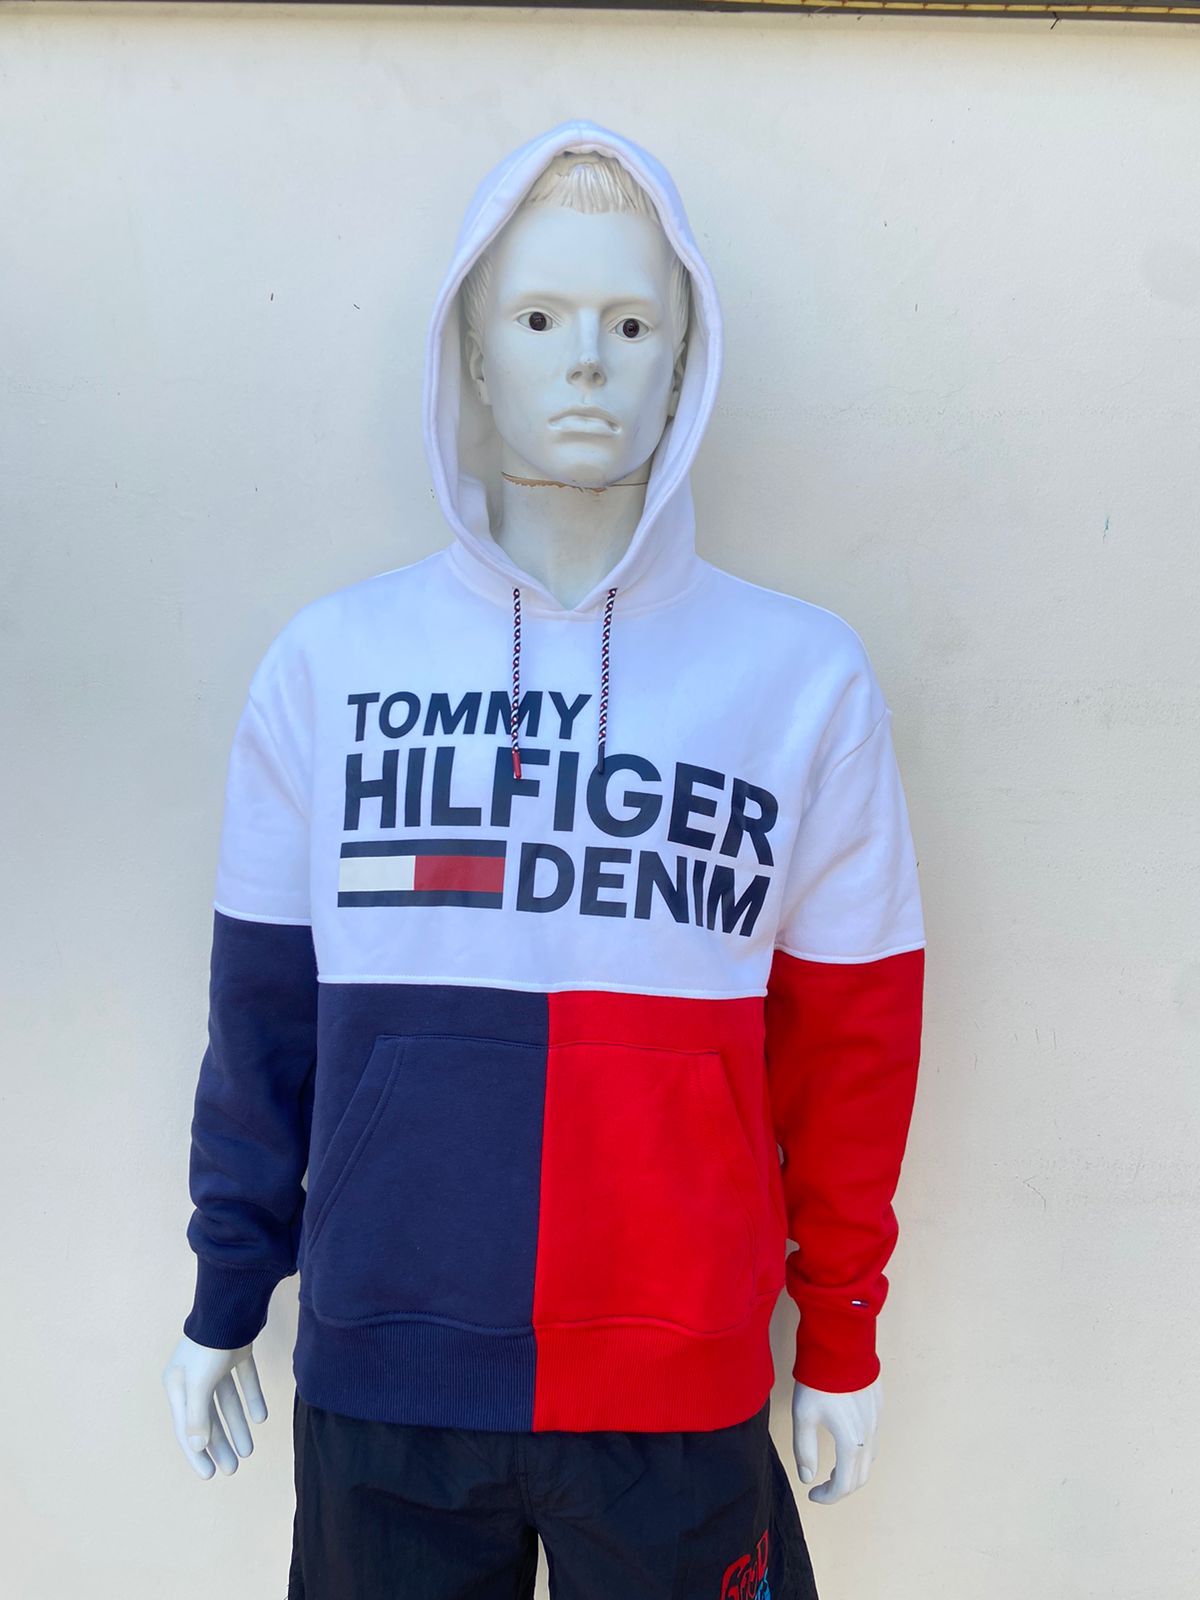 Abrigo Tommy Hilfiger original blanco con rojo y azul marino y letras TOMMY HILFIGER DENIM en frente, manga larga.